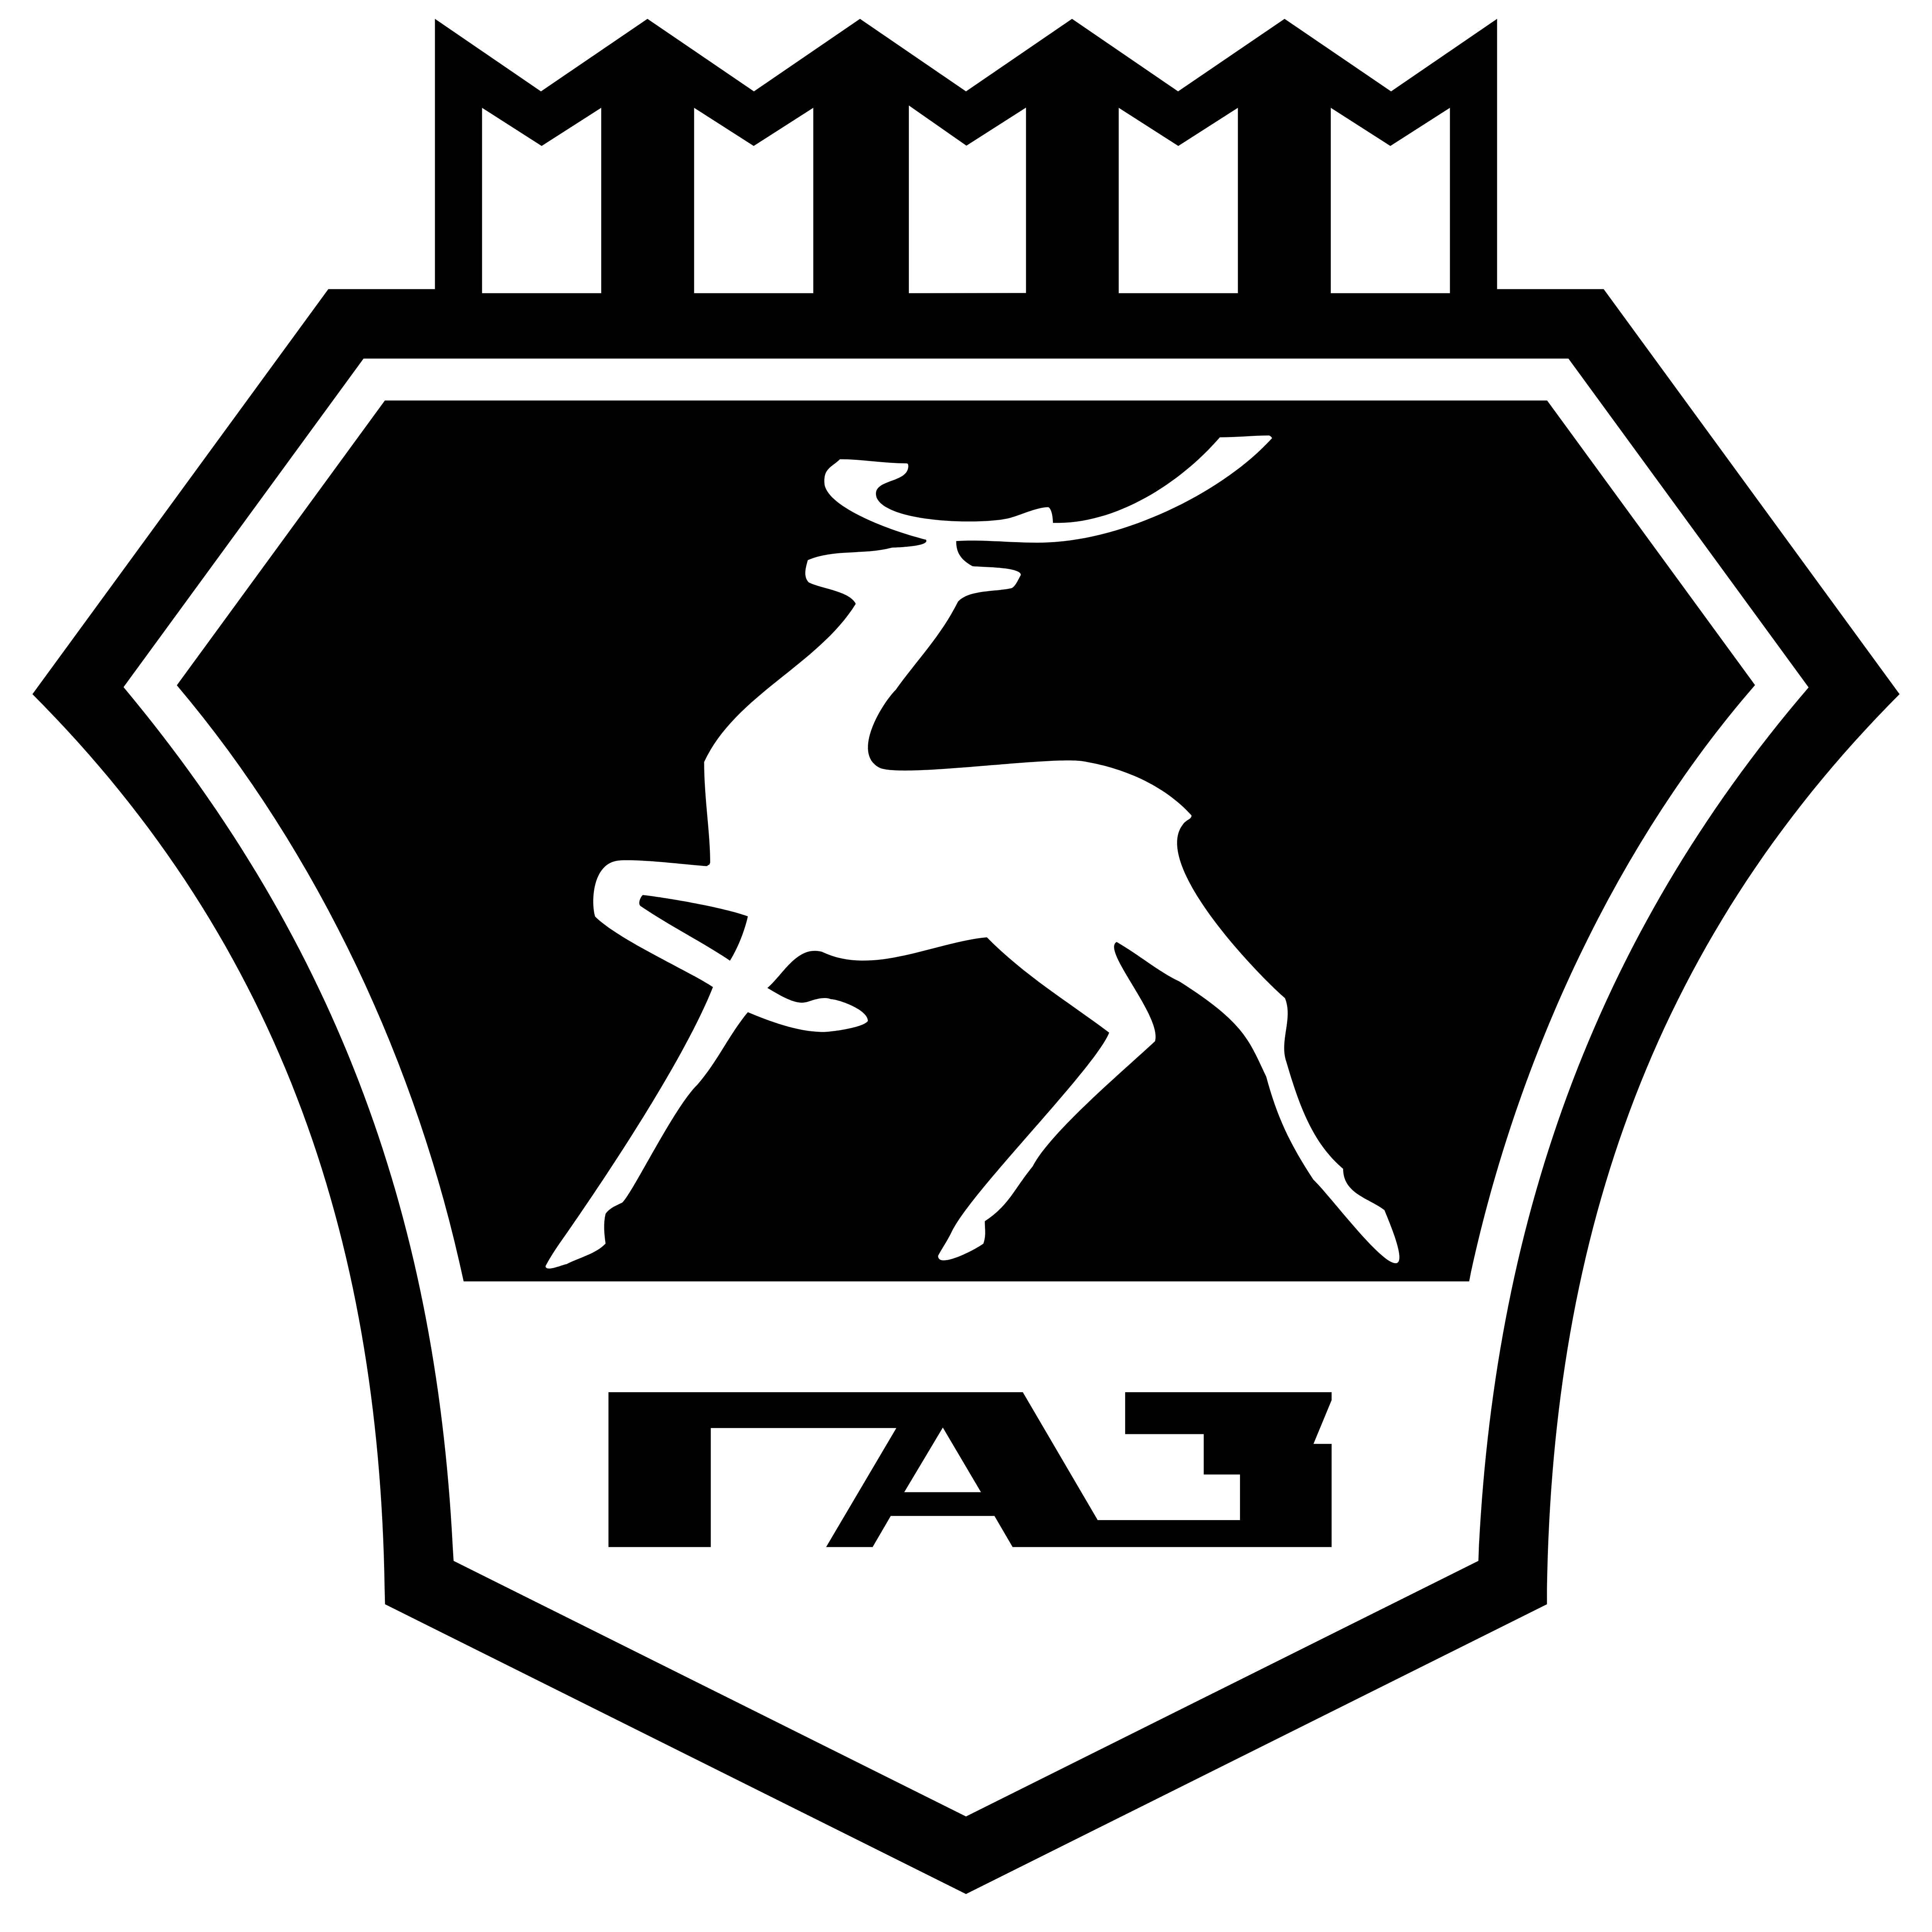 Gaz Logo - GAZ – Logos Download